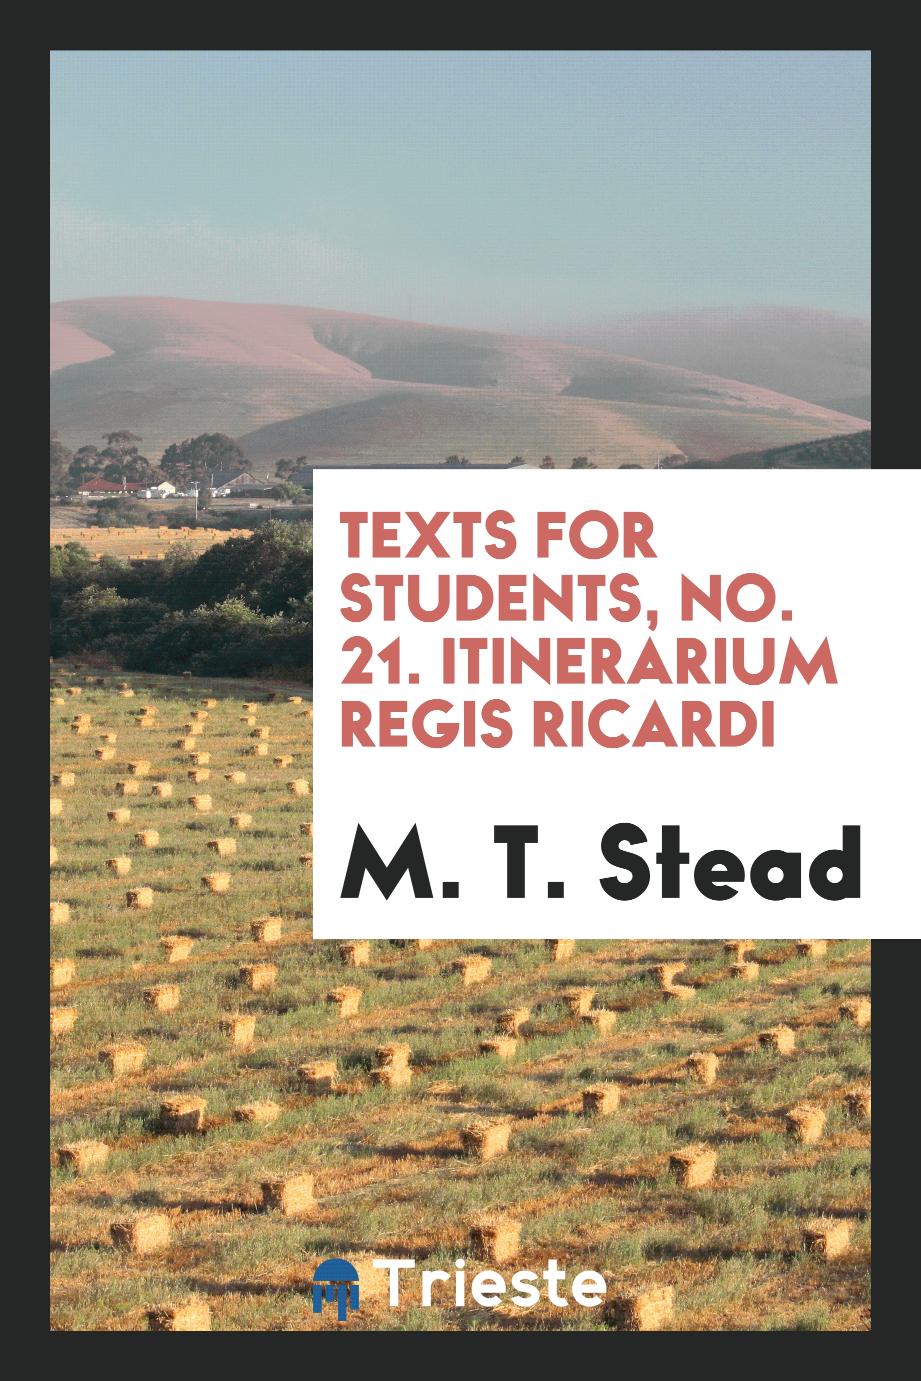 Texts for students, No. 21. Itinerarium regis ricardi